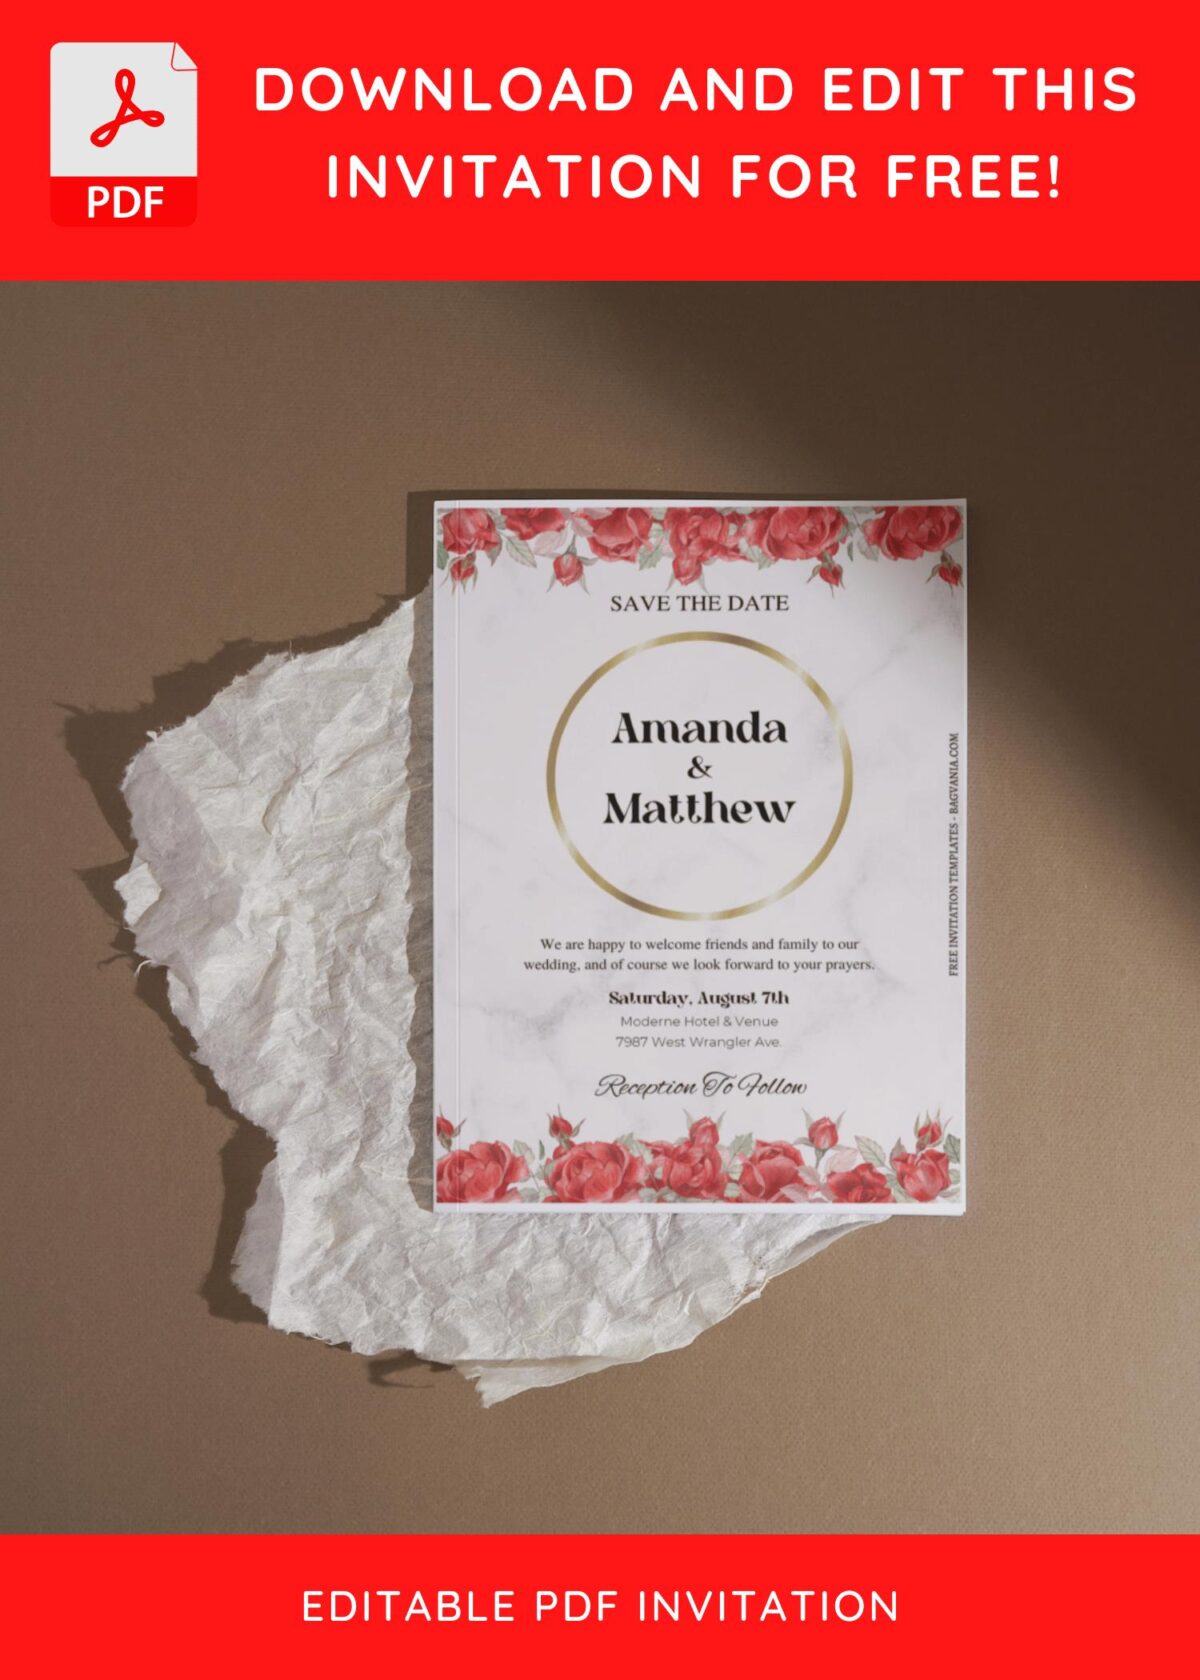 (Free Editable PDF) Whimsical Rosebud Wedding Invitation Templates with floral and foliage